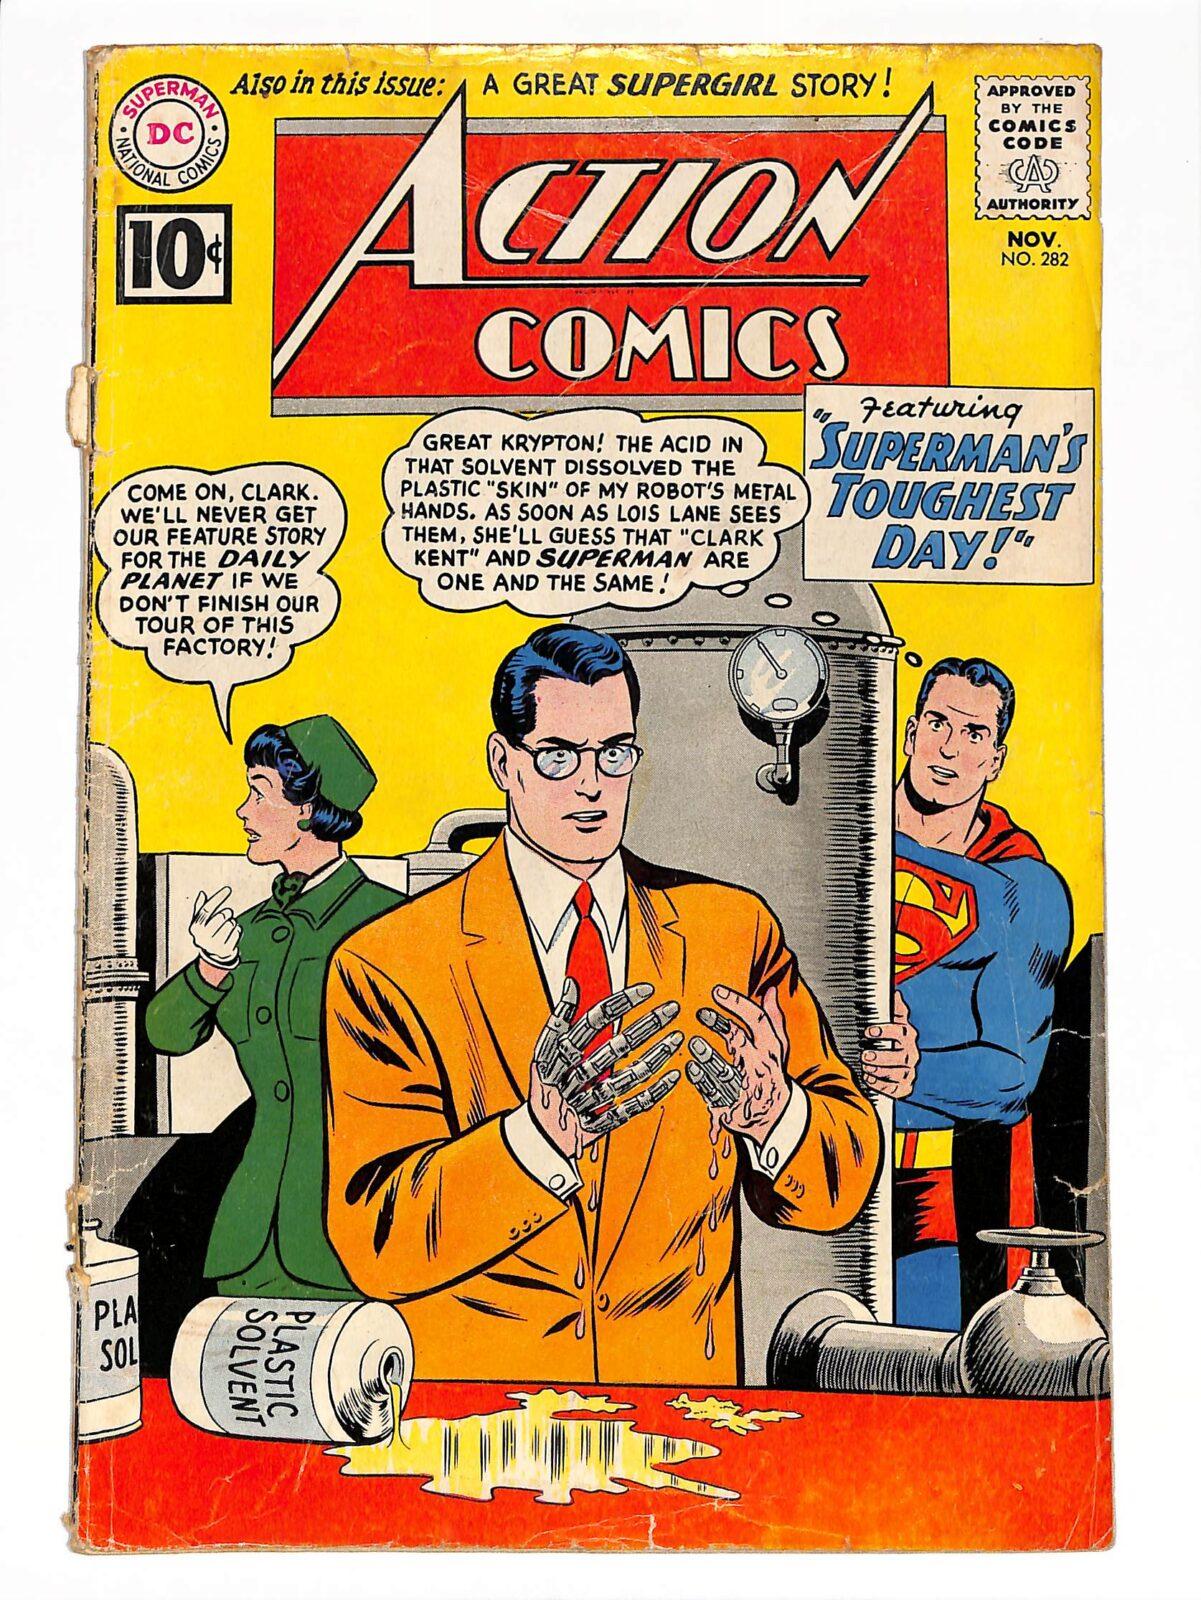 Action Comics #282